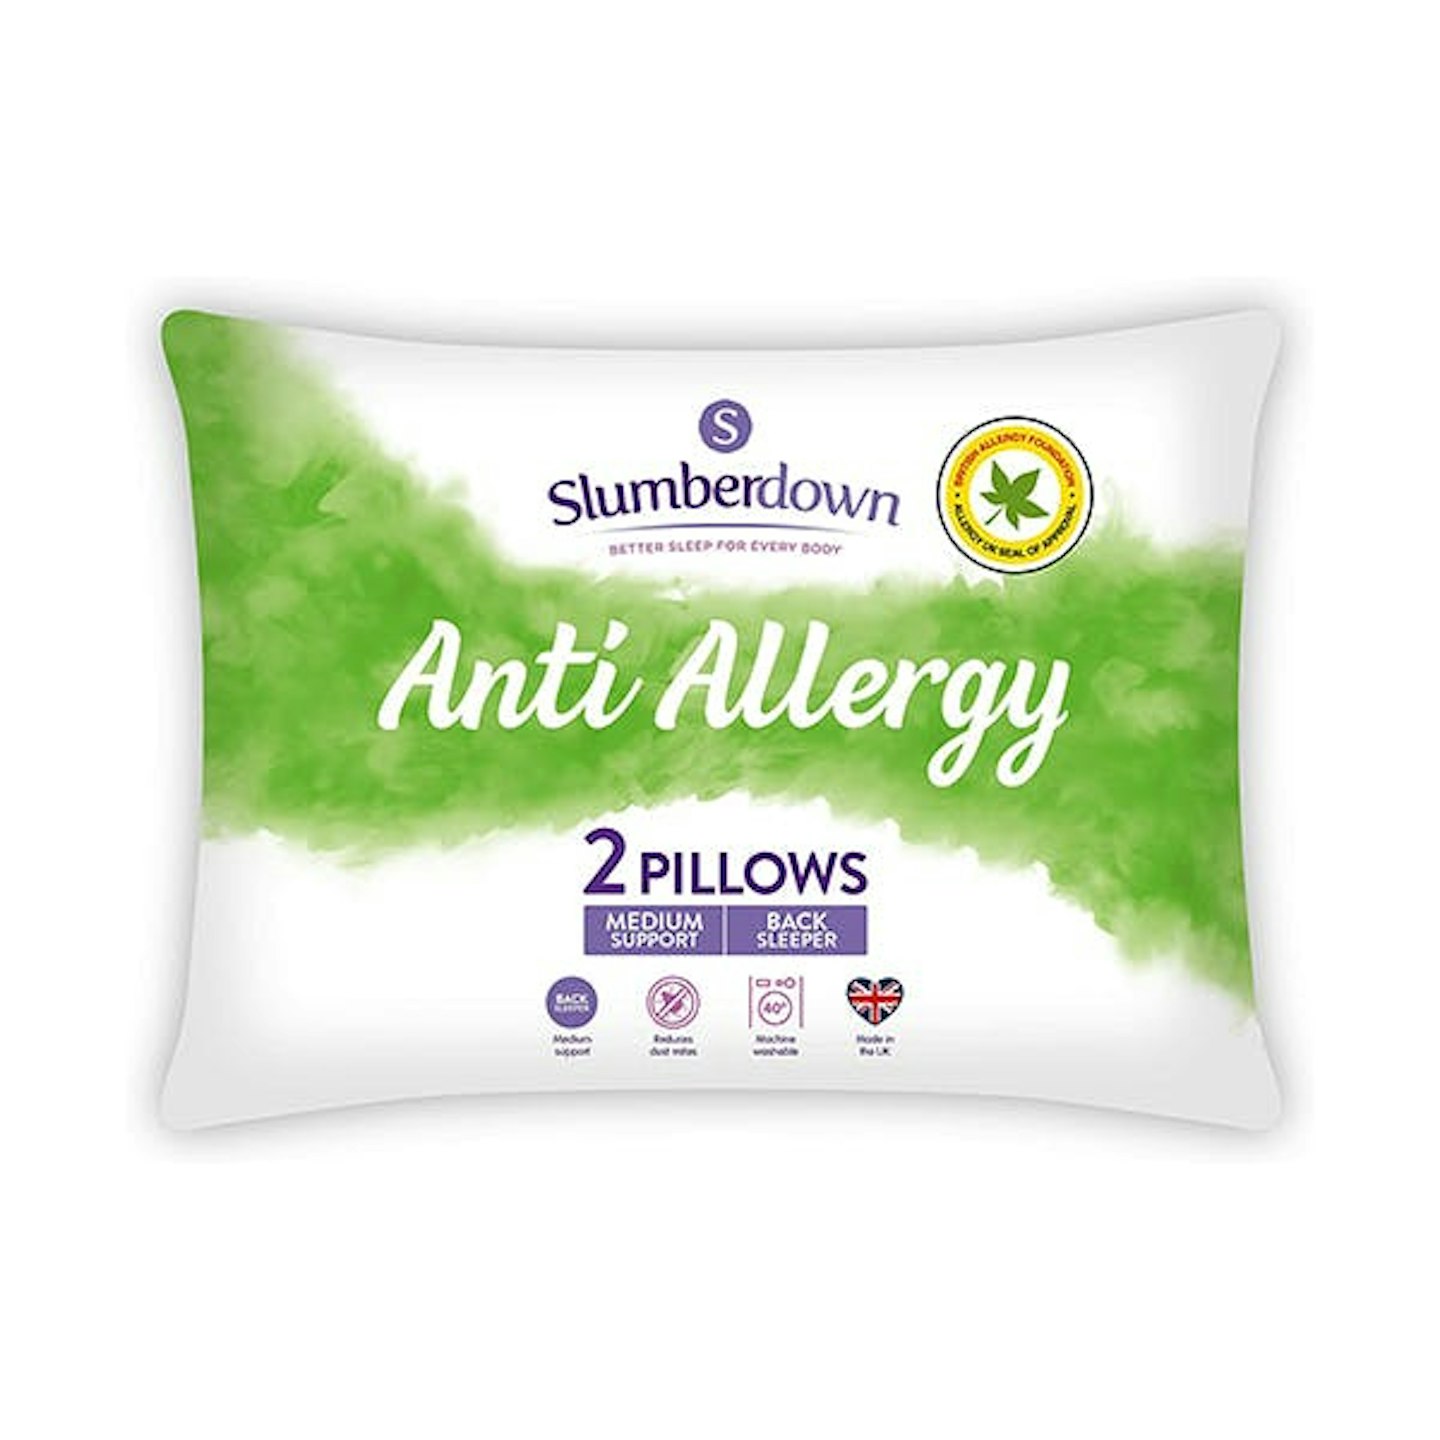 Slumberdown Anti Allergy White Pillows 2 Pack Medium Support Bed Pillows